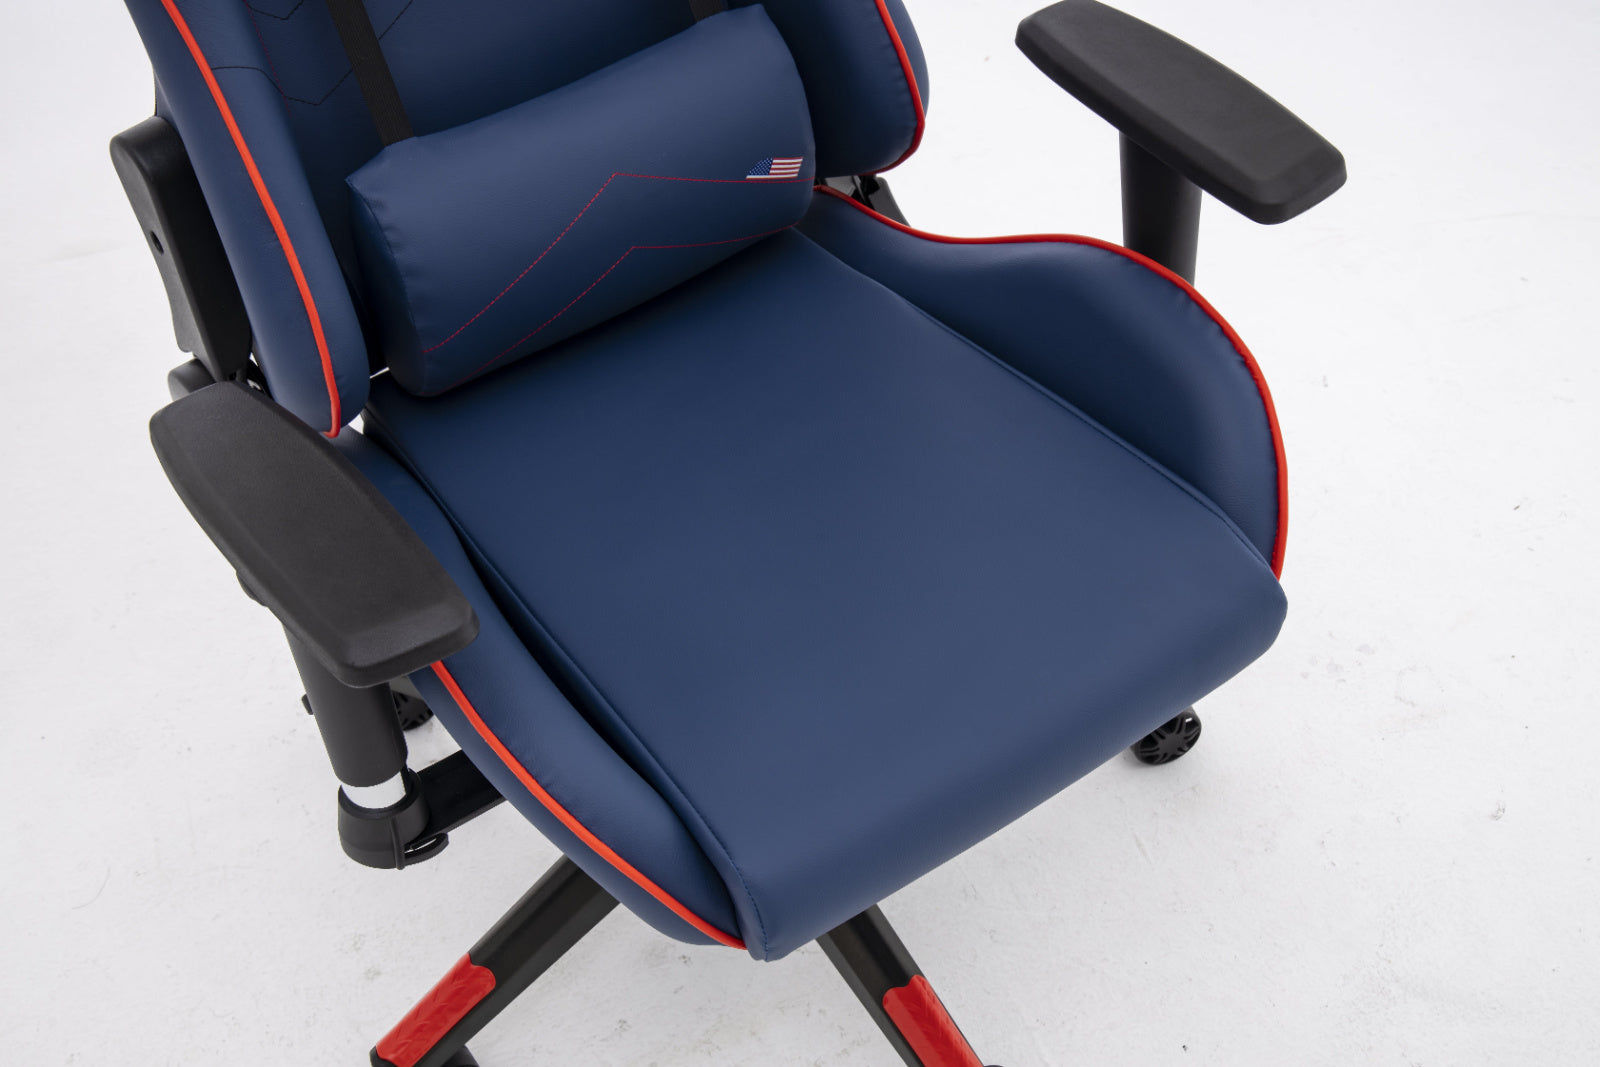 Nasa Galactic Gaming Chair - Blue and Red